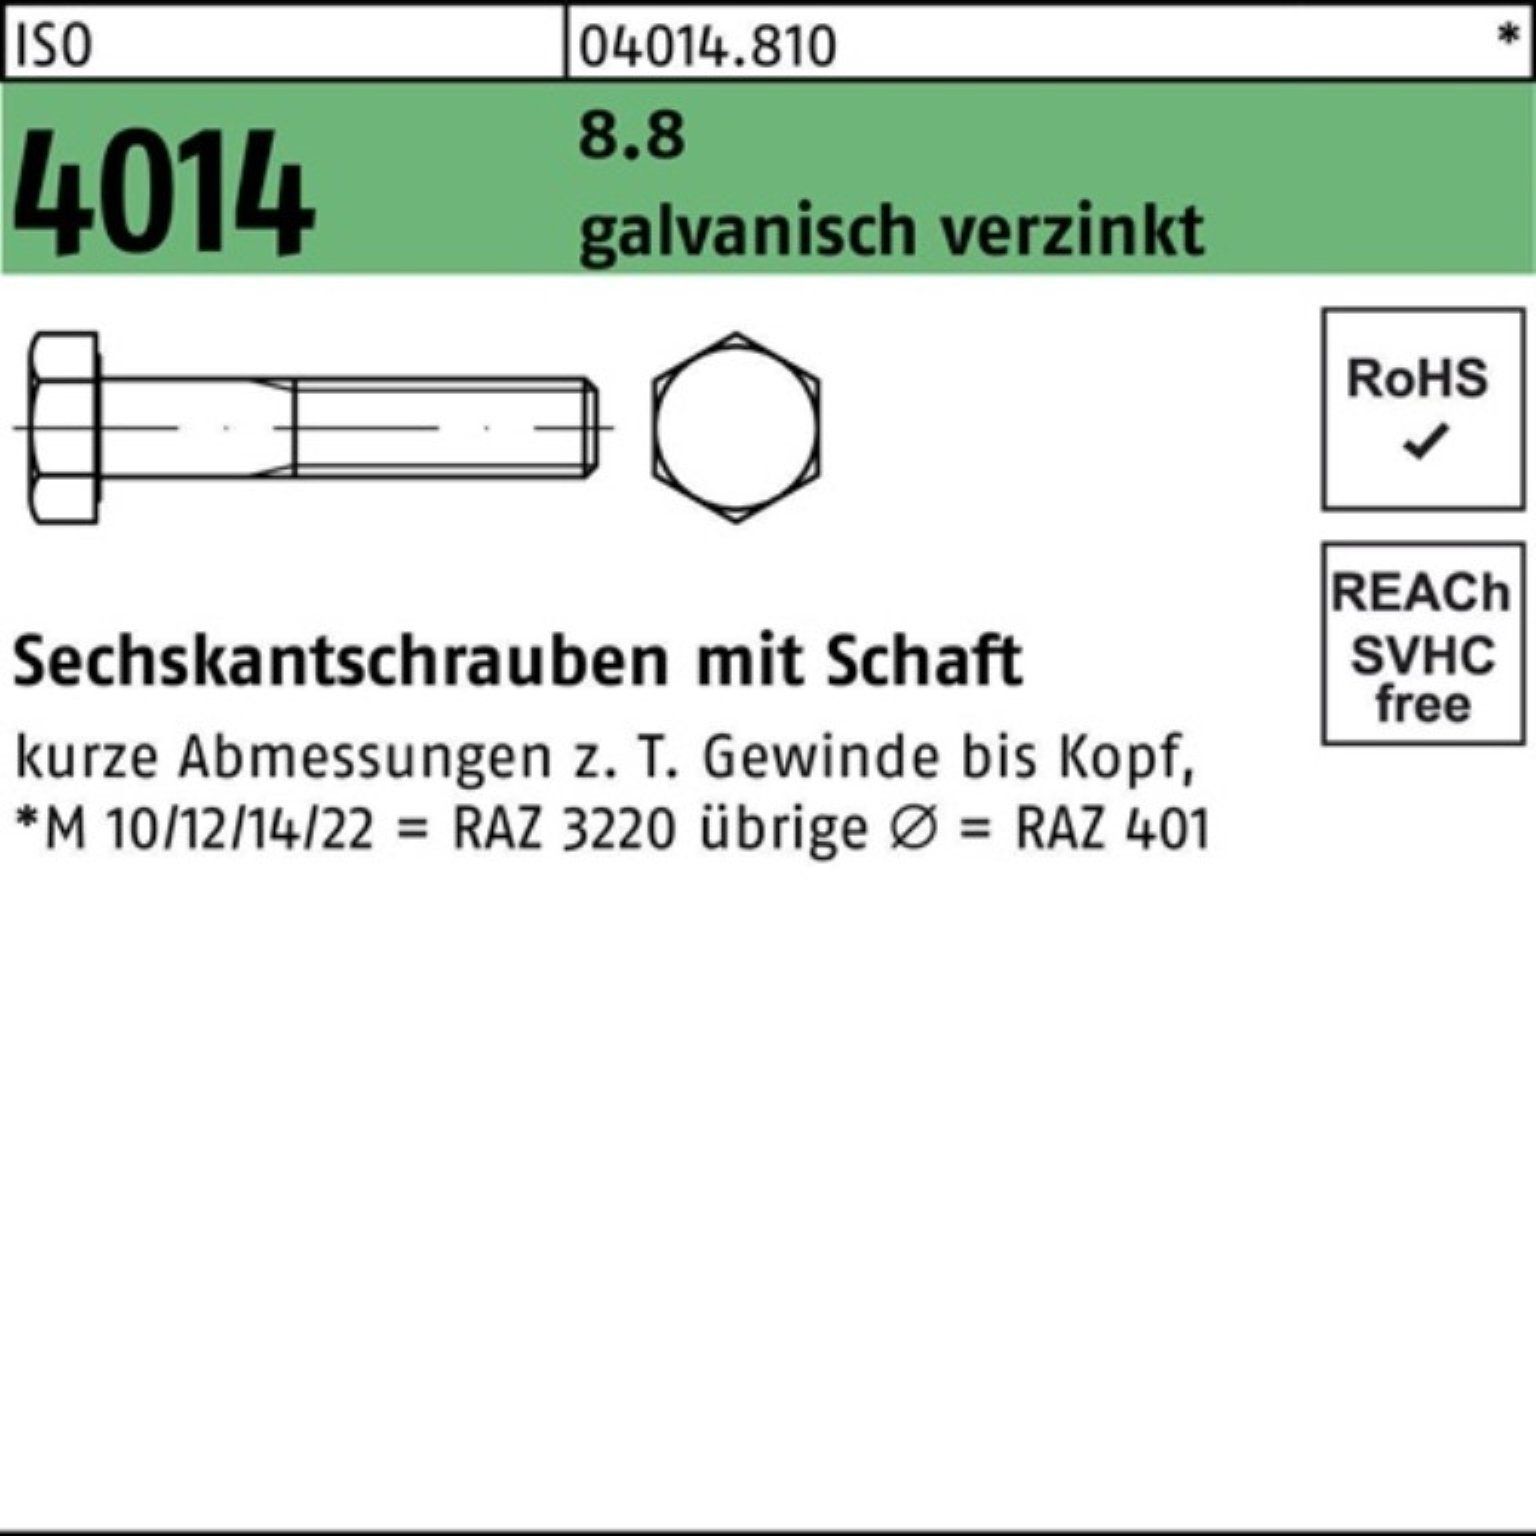 Bufab Sechskantschraube 100er Pack Sechskantschraube ISO 4014 Schaft M39x 200 8.8 galv.verz. 1 | Schrauben